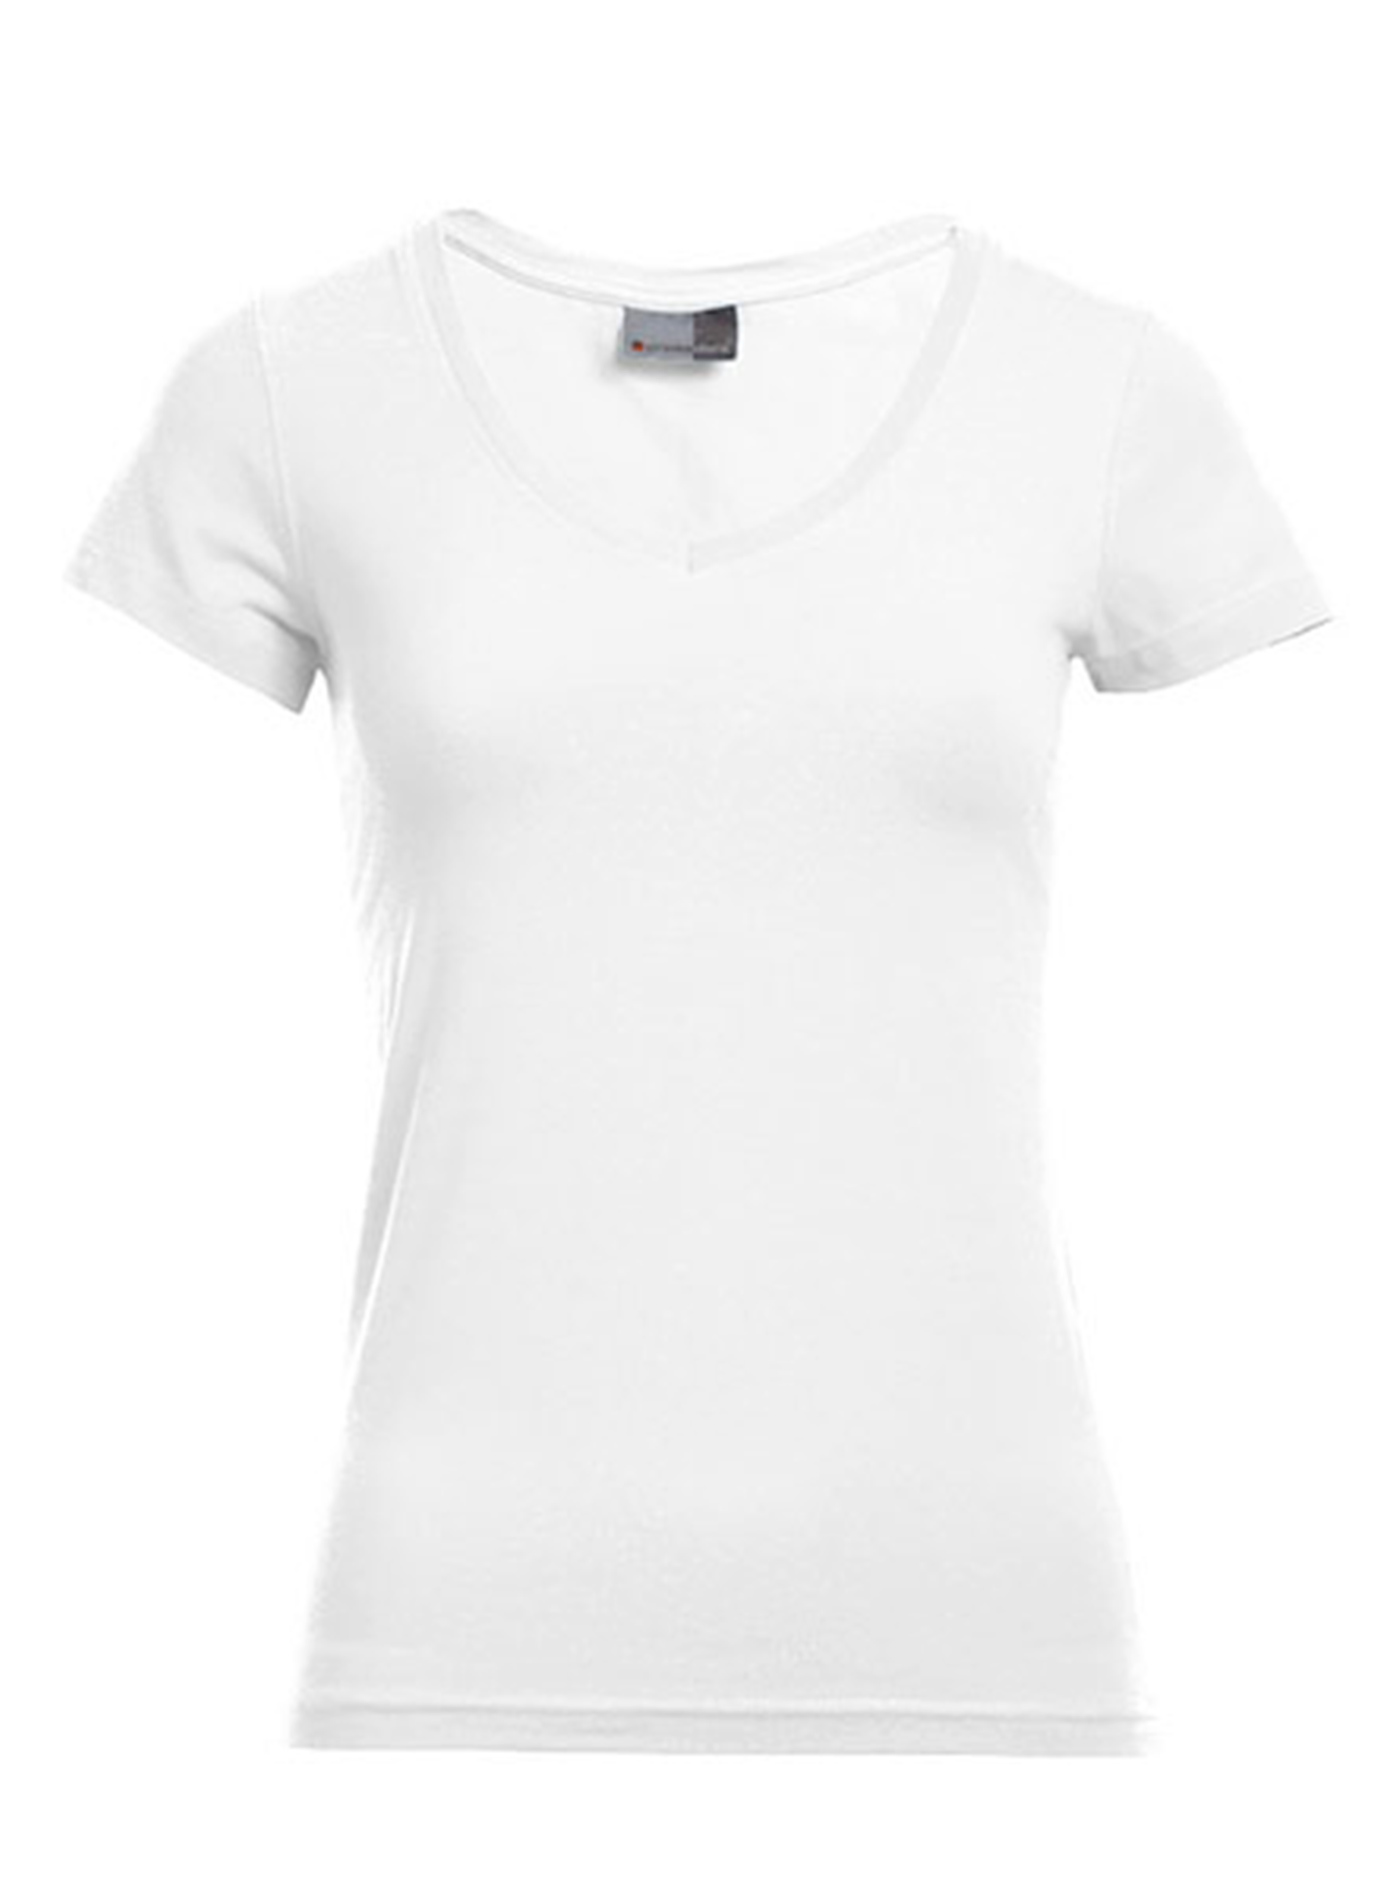 Dámské tričko s výstřihem do V Promodoro - Bílá L